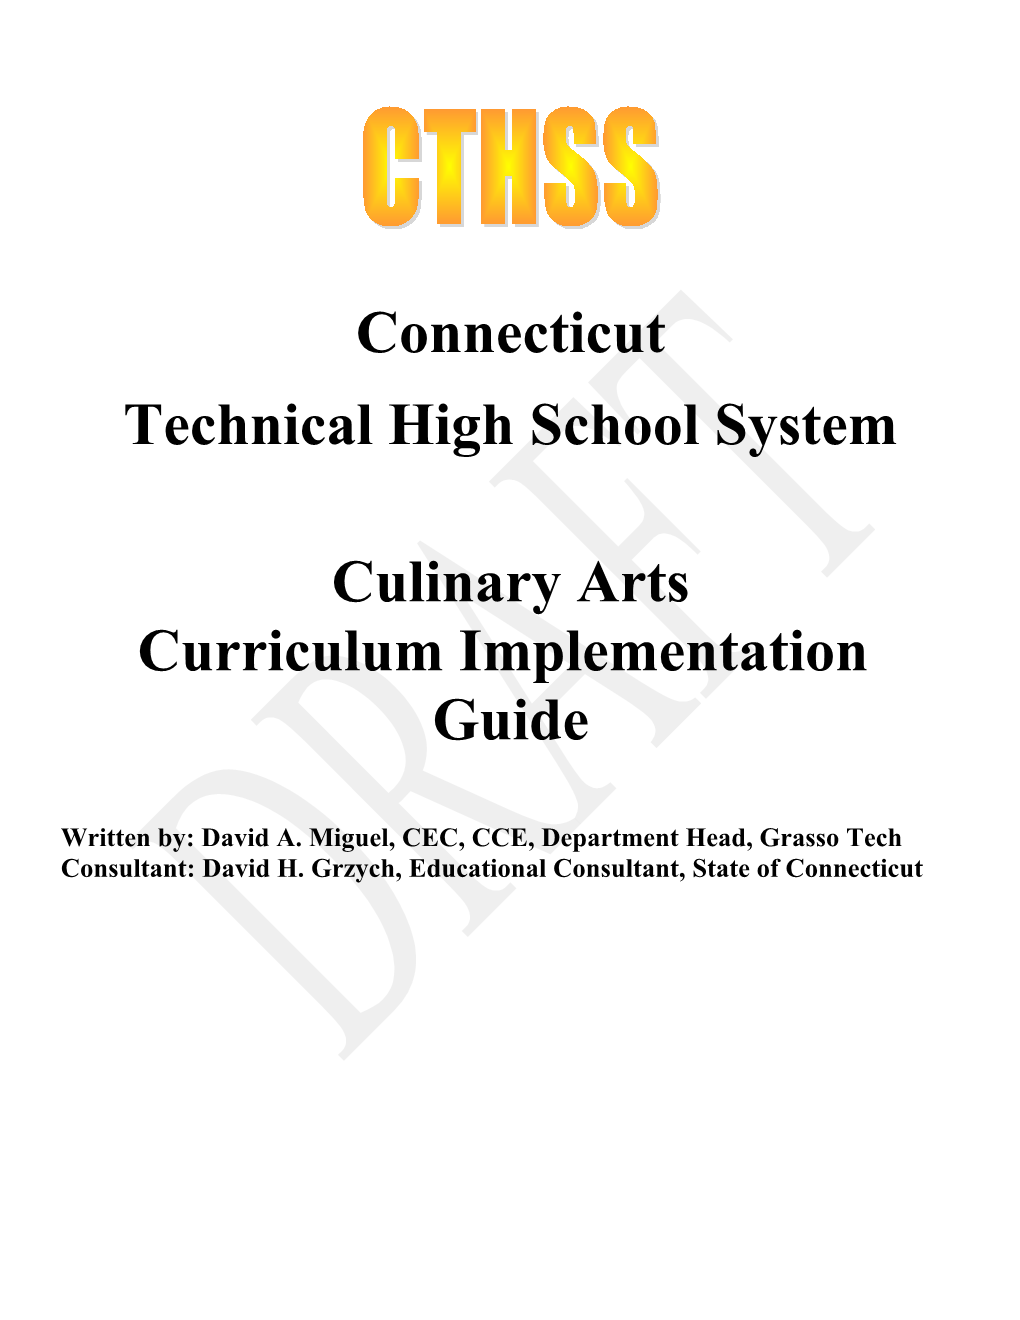 CTHSS Culinary Arts Curriculum Implementation Guide